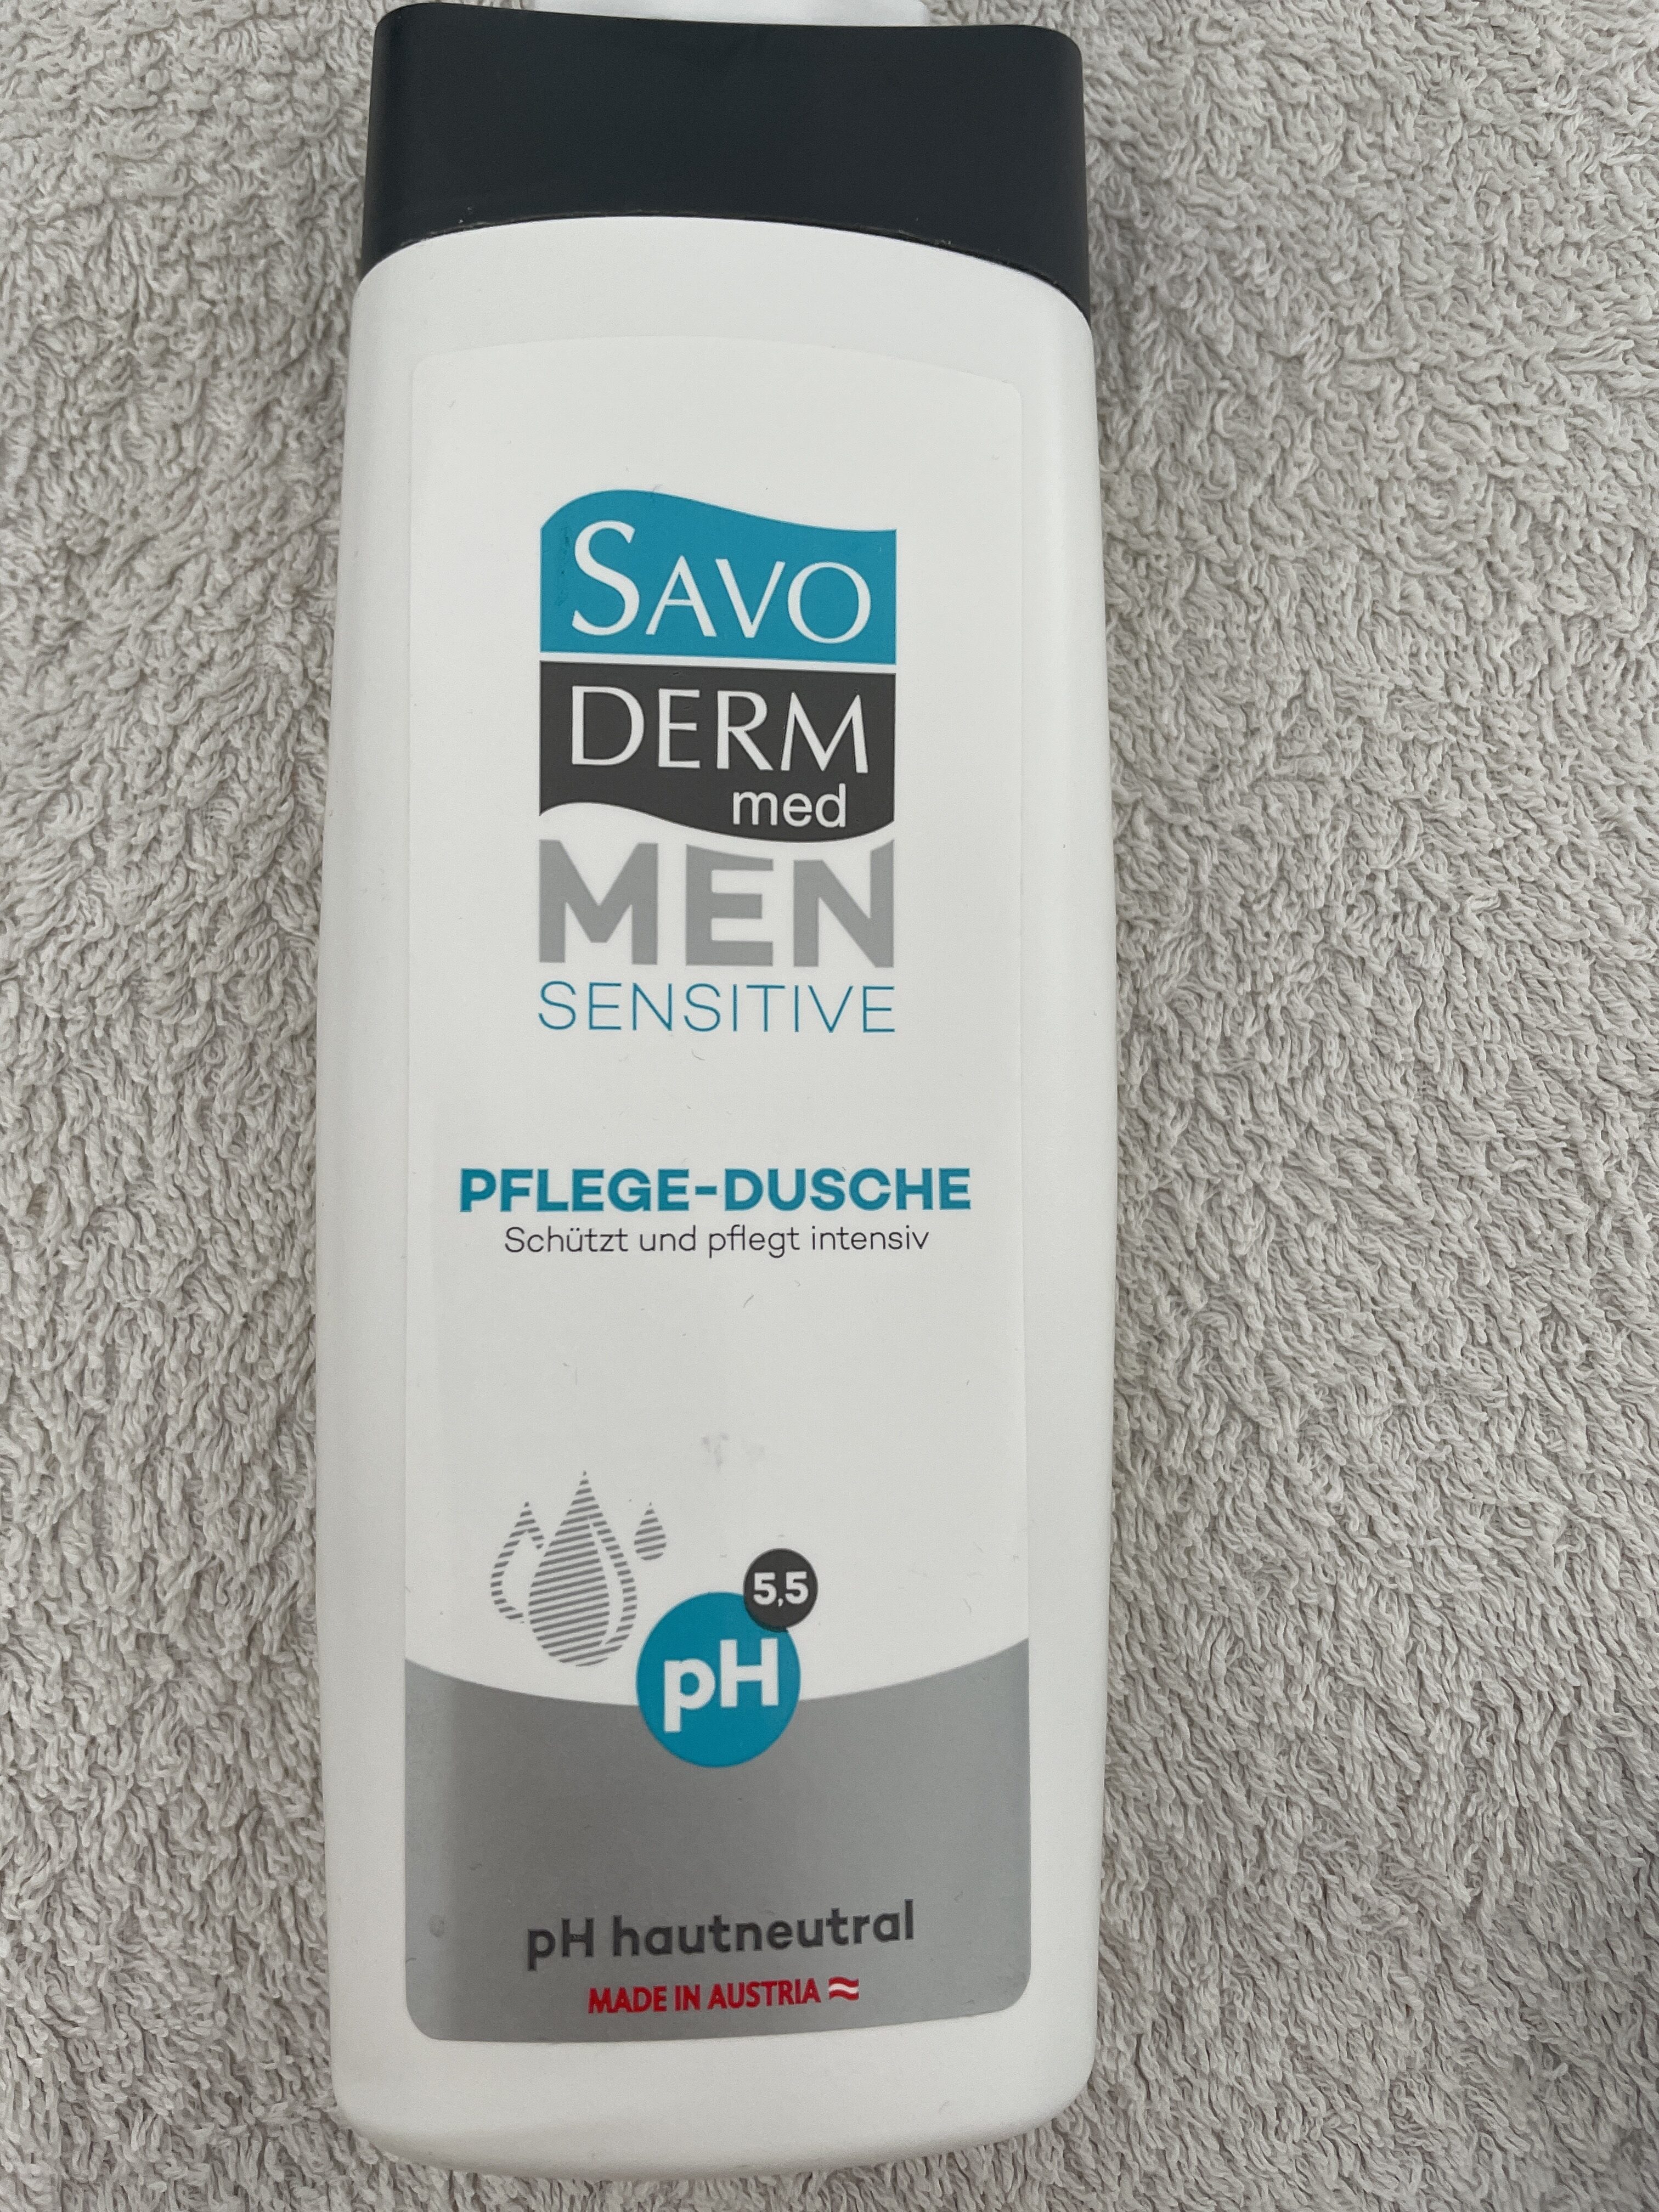 Men Sensitive Pflege-Dusche - Produkt - de